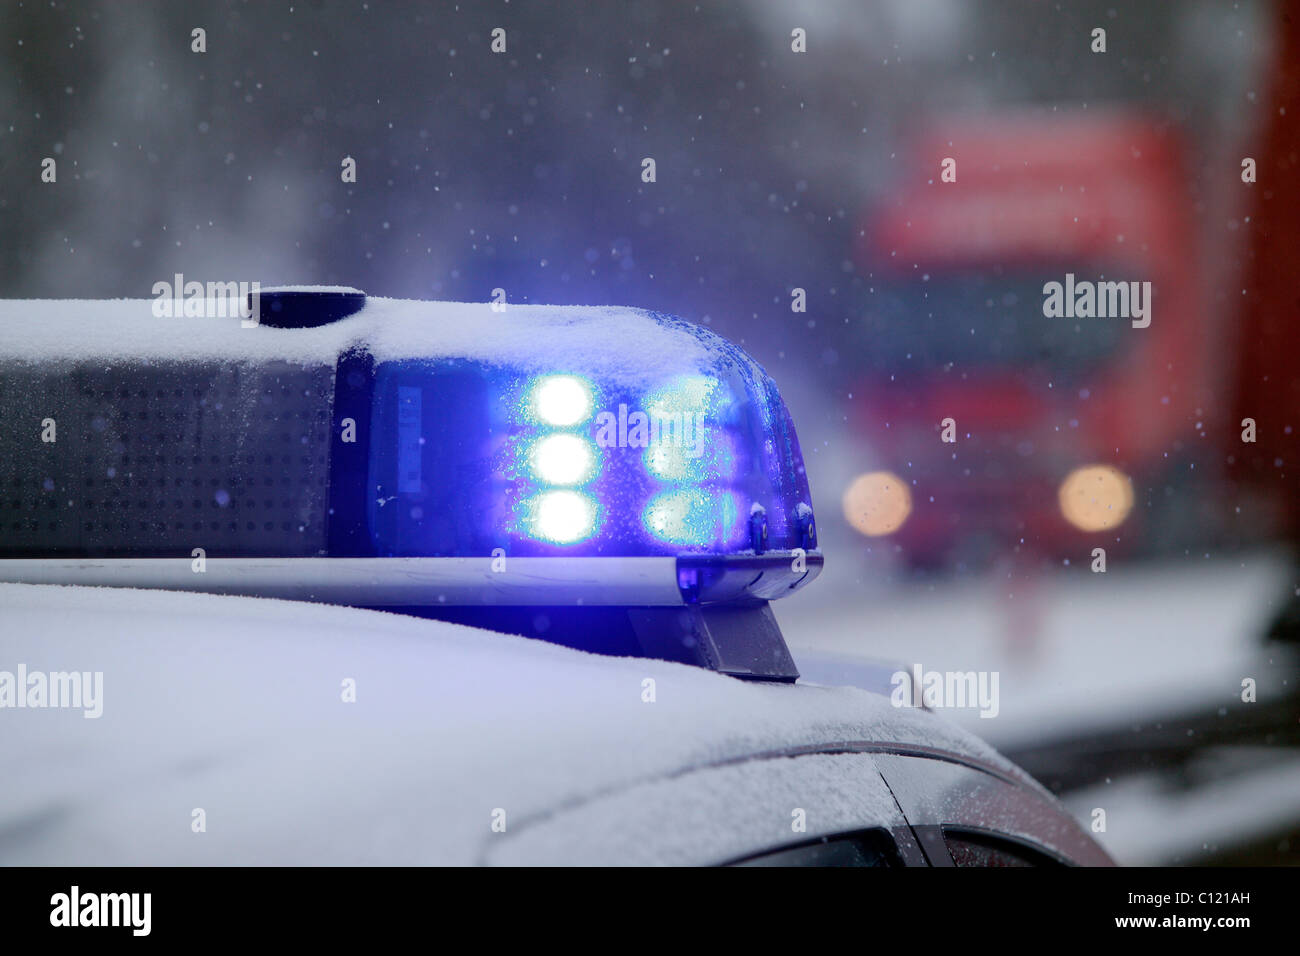 Blue light of a police vehicle in a snow flurry, Rheinboellen, Rhineland-Palatinate, Germany, Europe Stock Photo